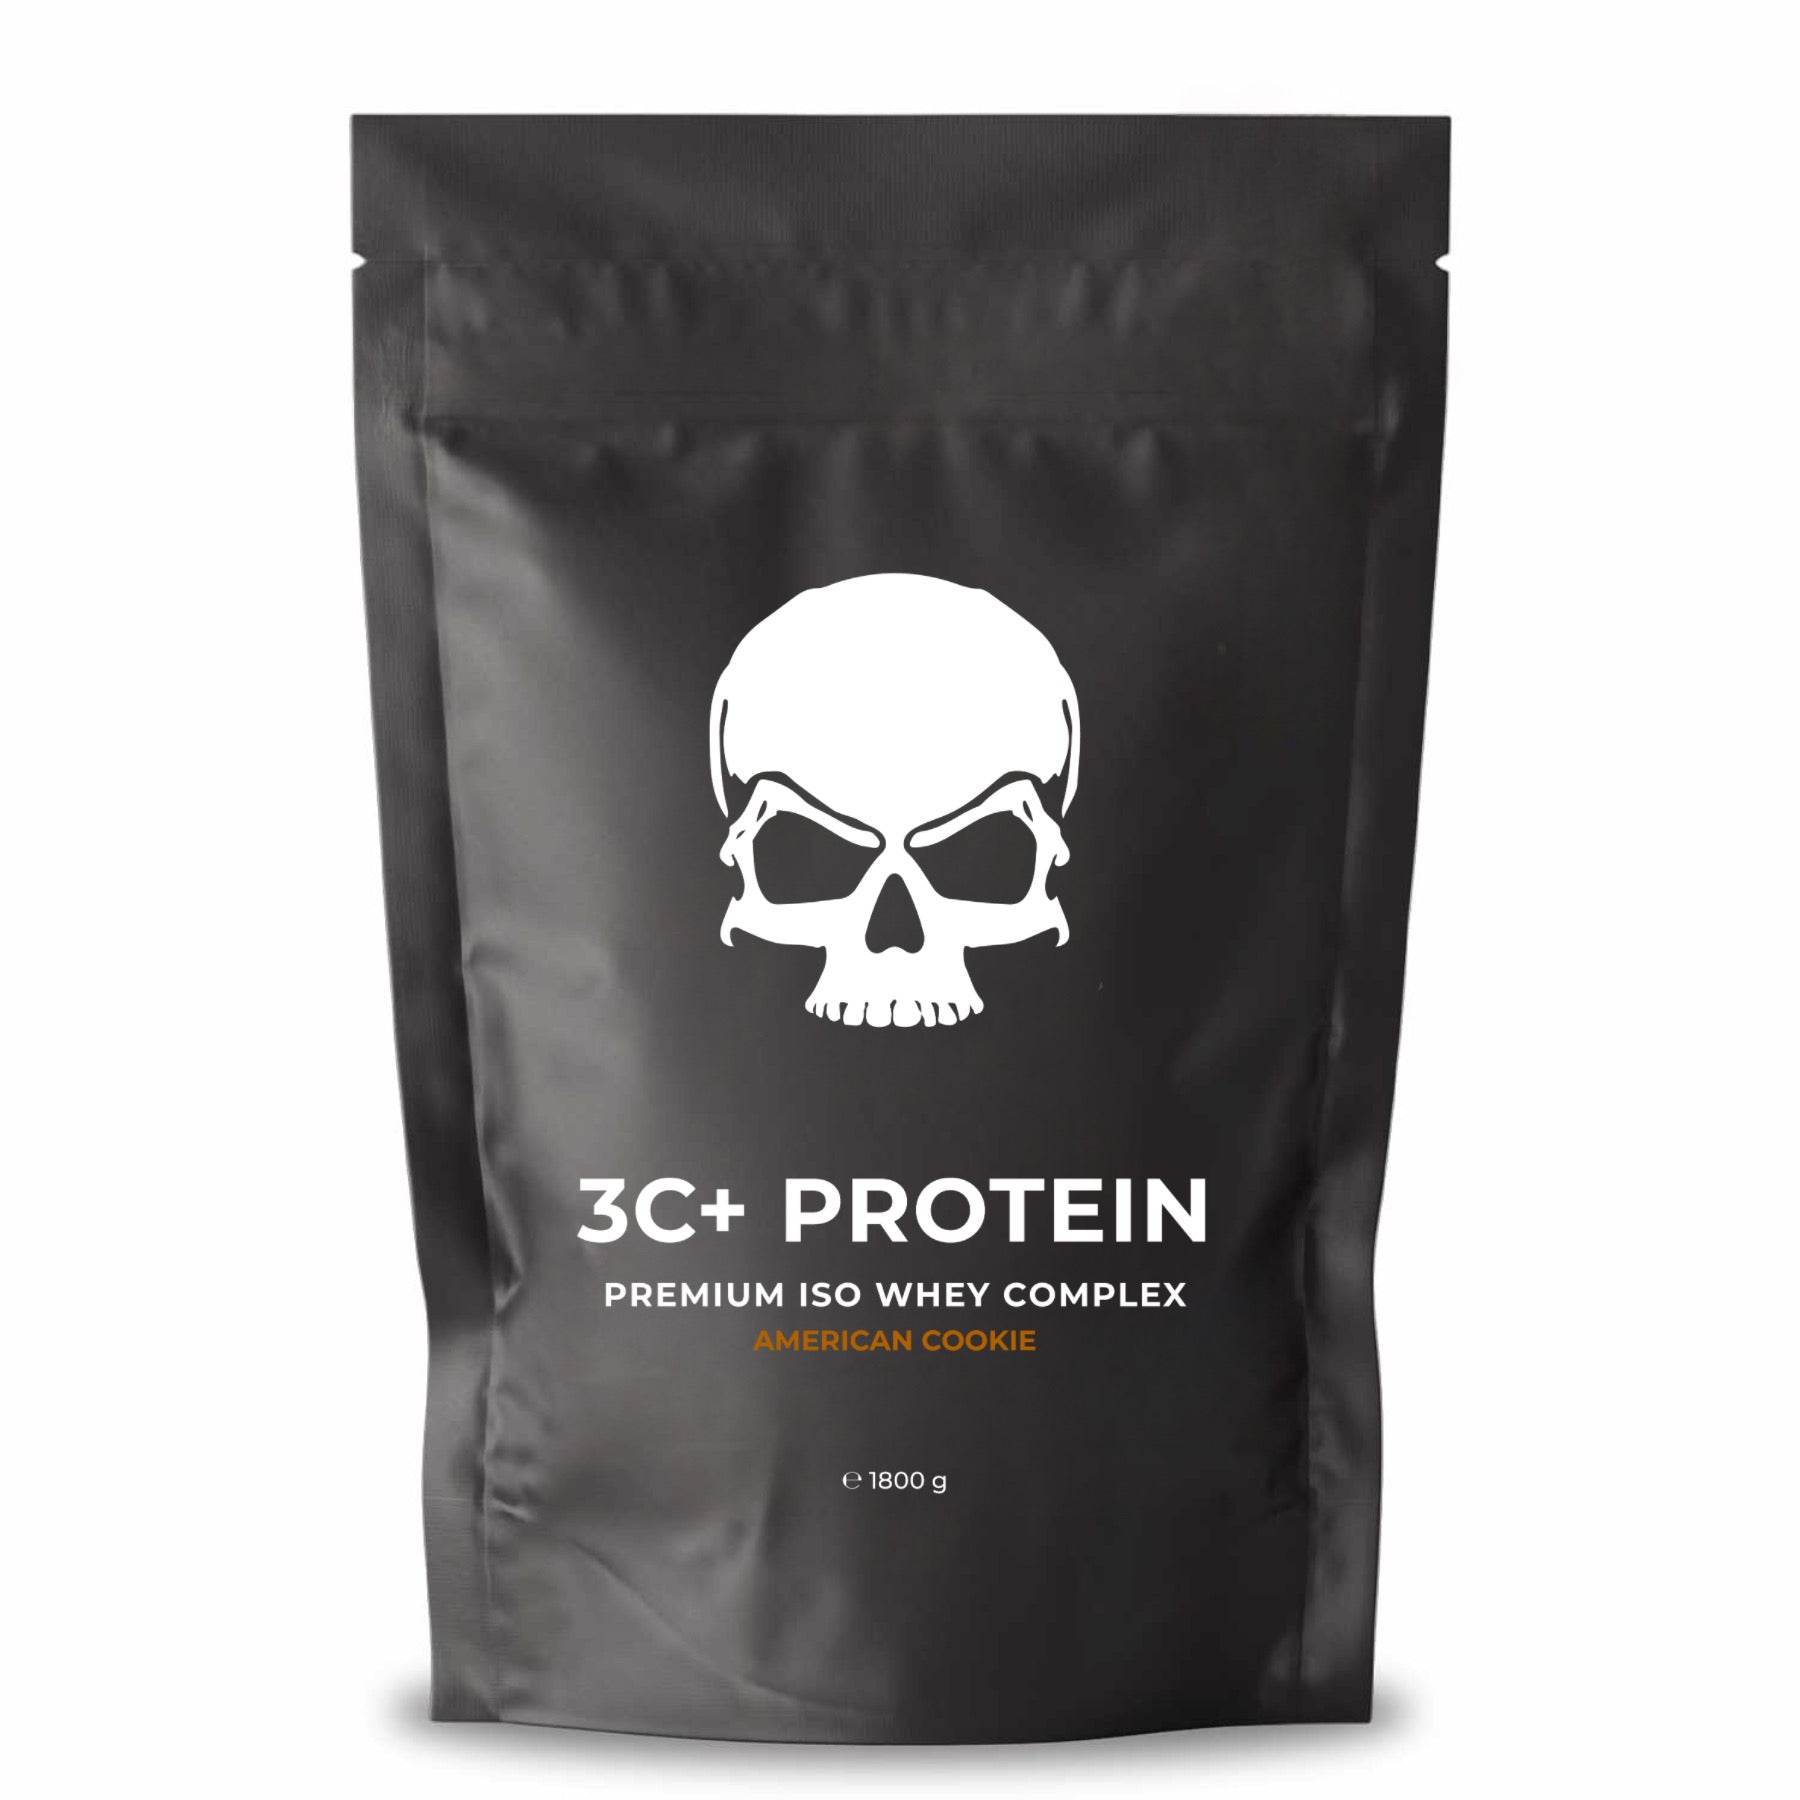 3C+ Protein  - Premium Iso Whey Complex